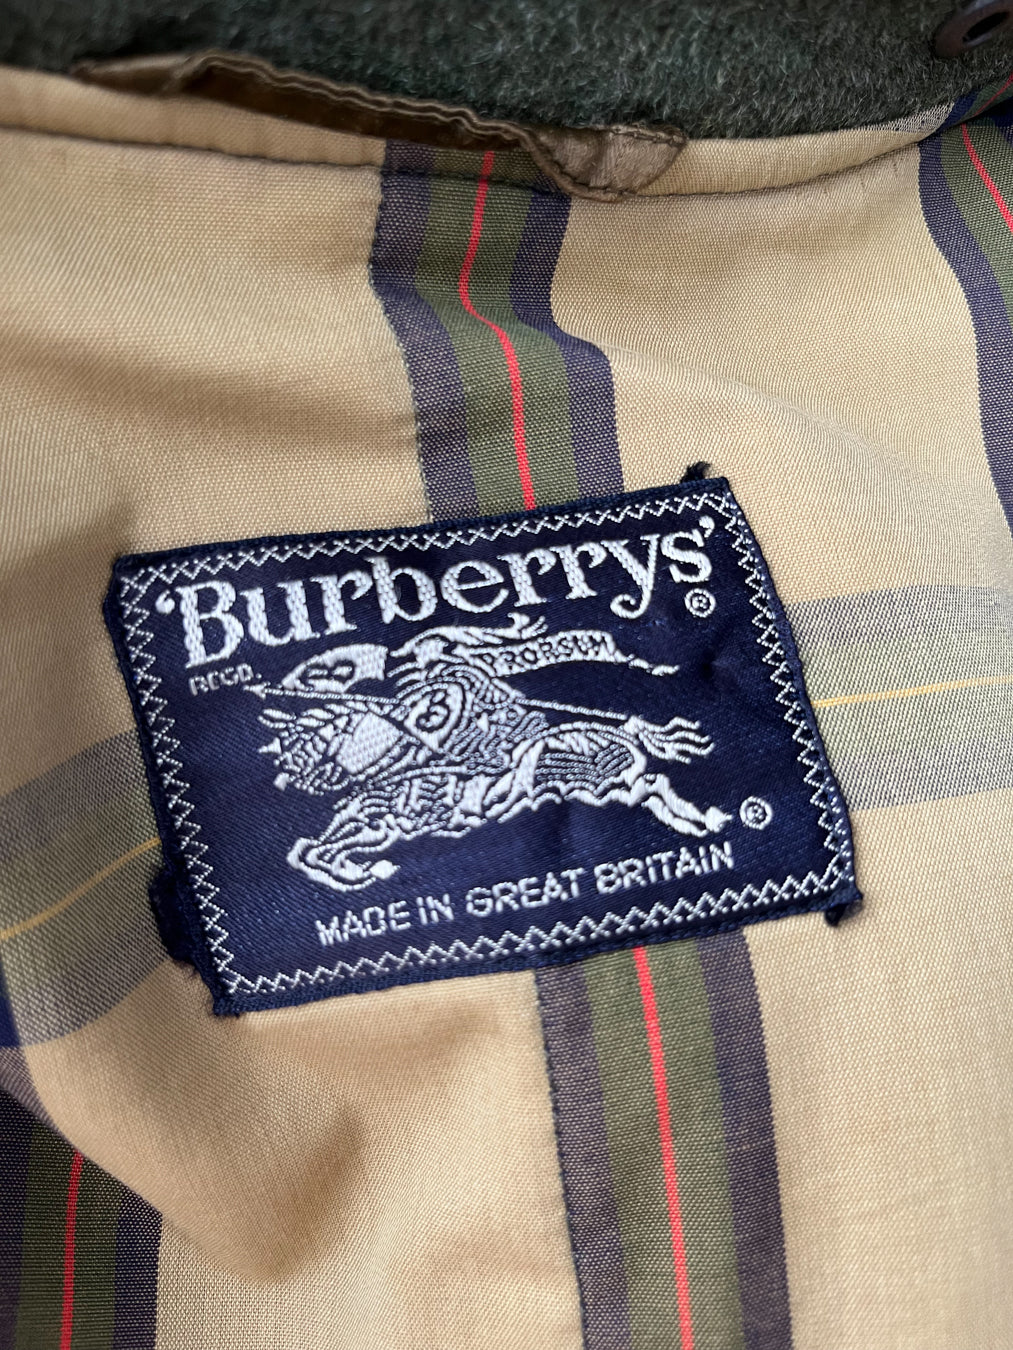 Burberry - Burberry's - Kaki Bomber w/ Detachable Sleeves